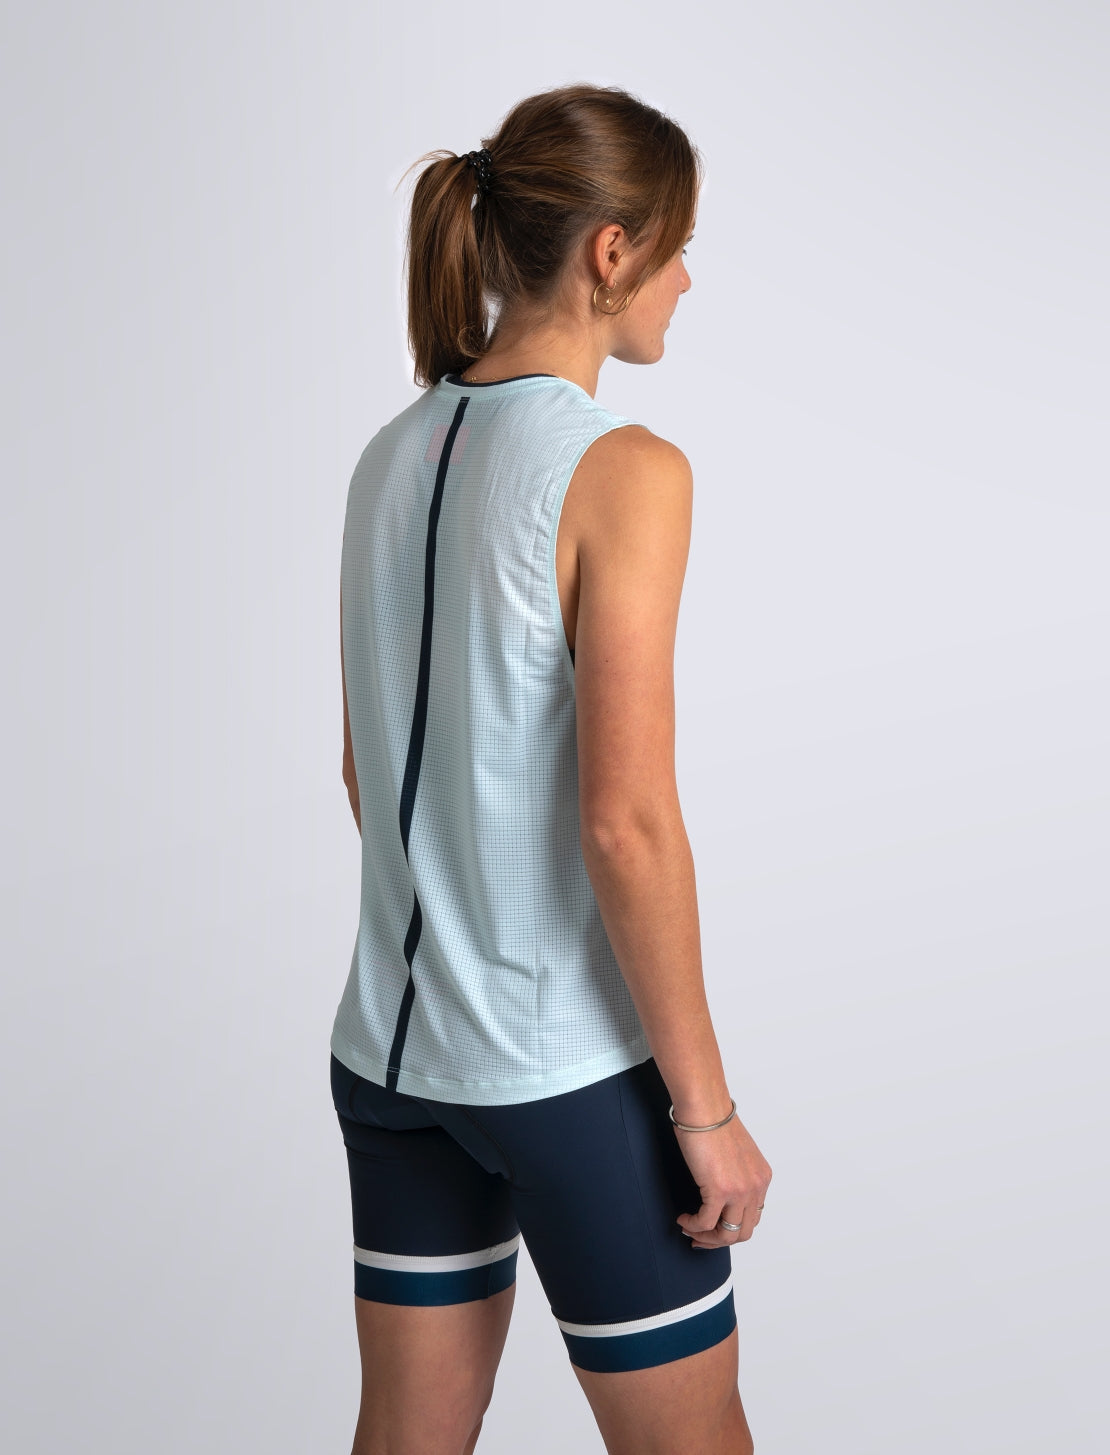 Women's sleeveless training top in Skylight Blue #color_skylight-blue